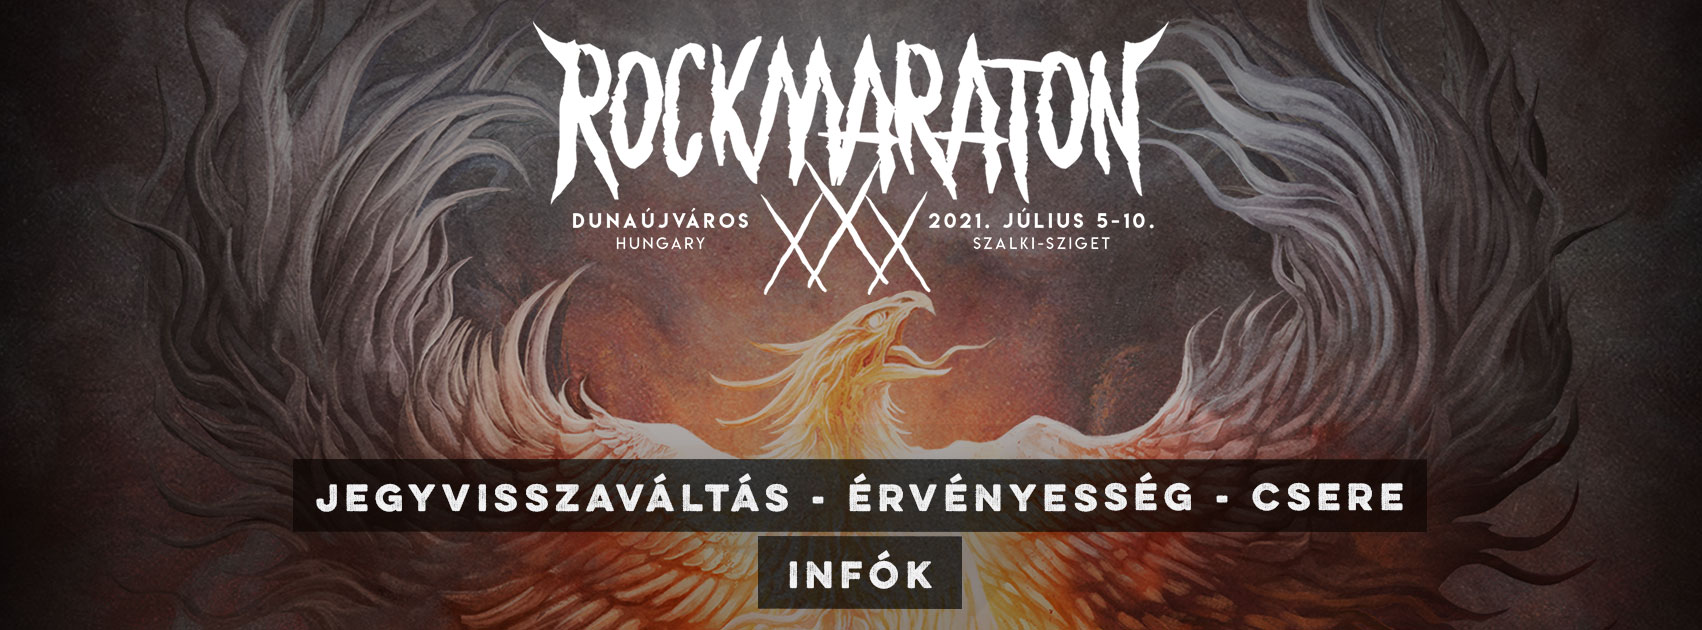 rockmaratoninfo01.jpg